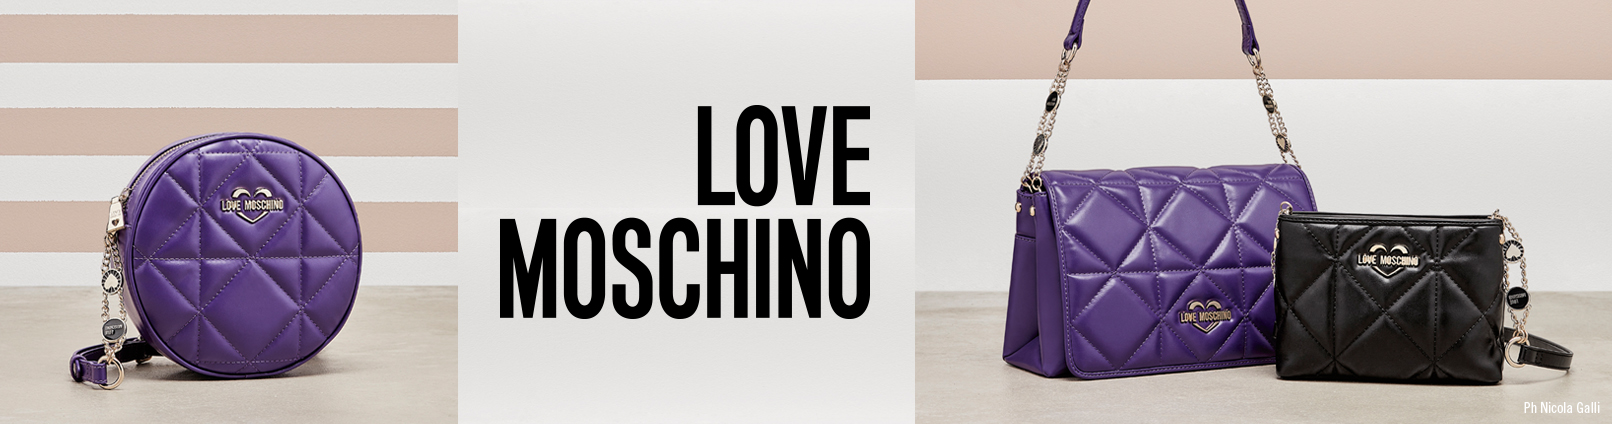 love moschino bags 2019